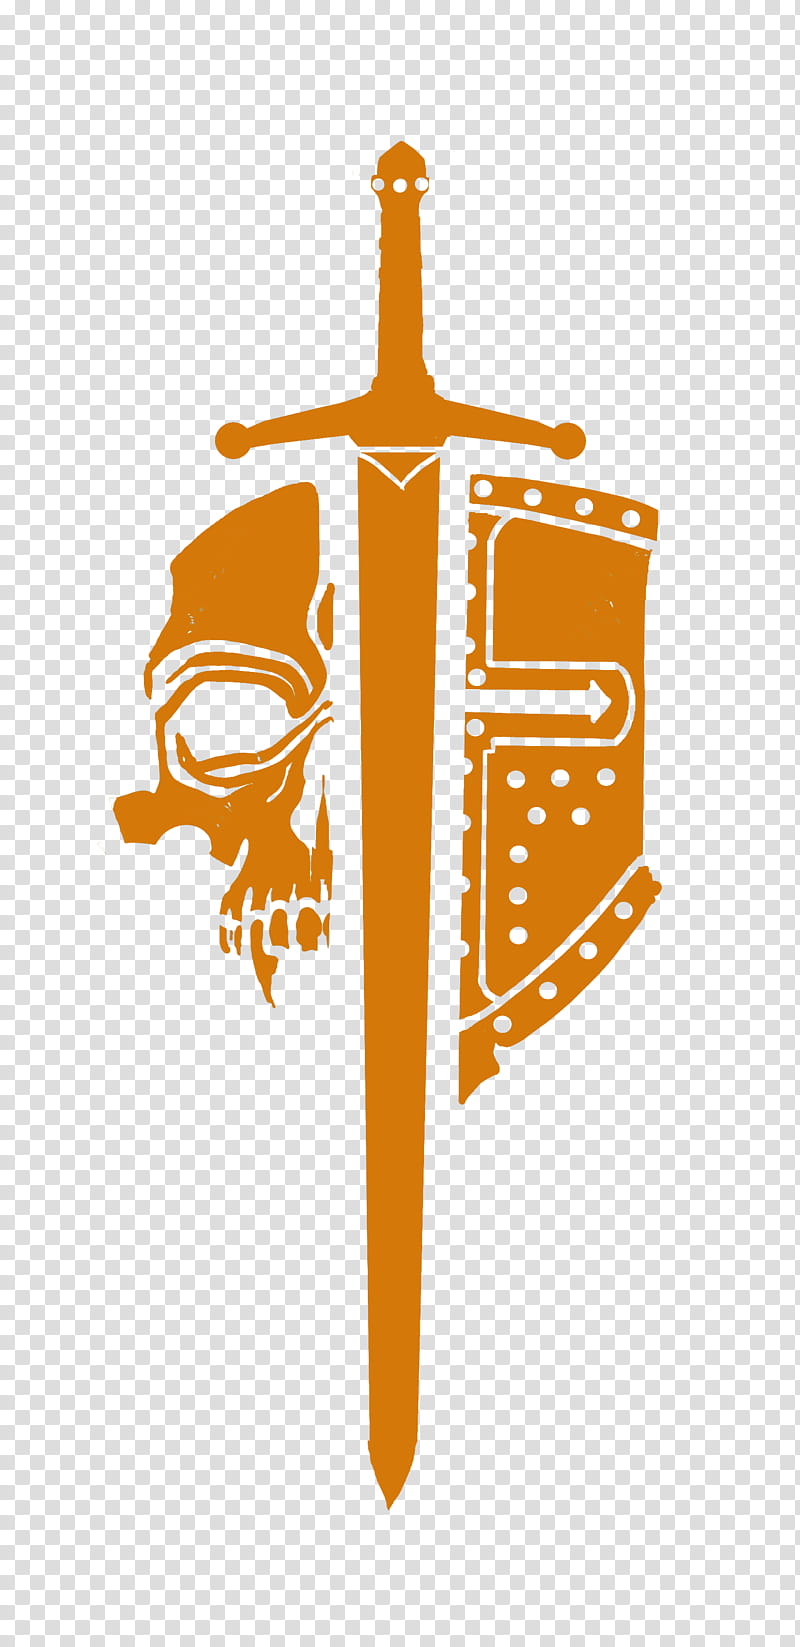 Knight, For Honor, Logo, Video Games, Symbol, Emblem, Tshirt, Abaddon transparent background PNG clipart